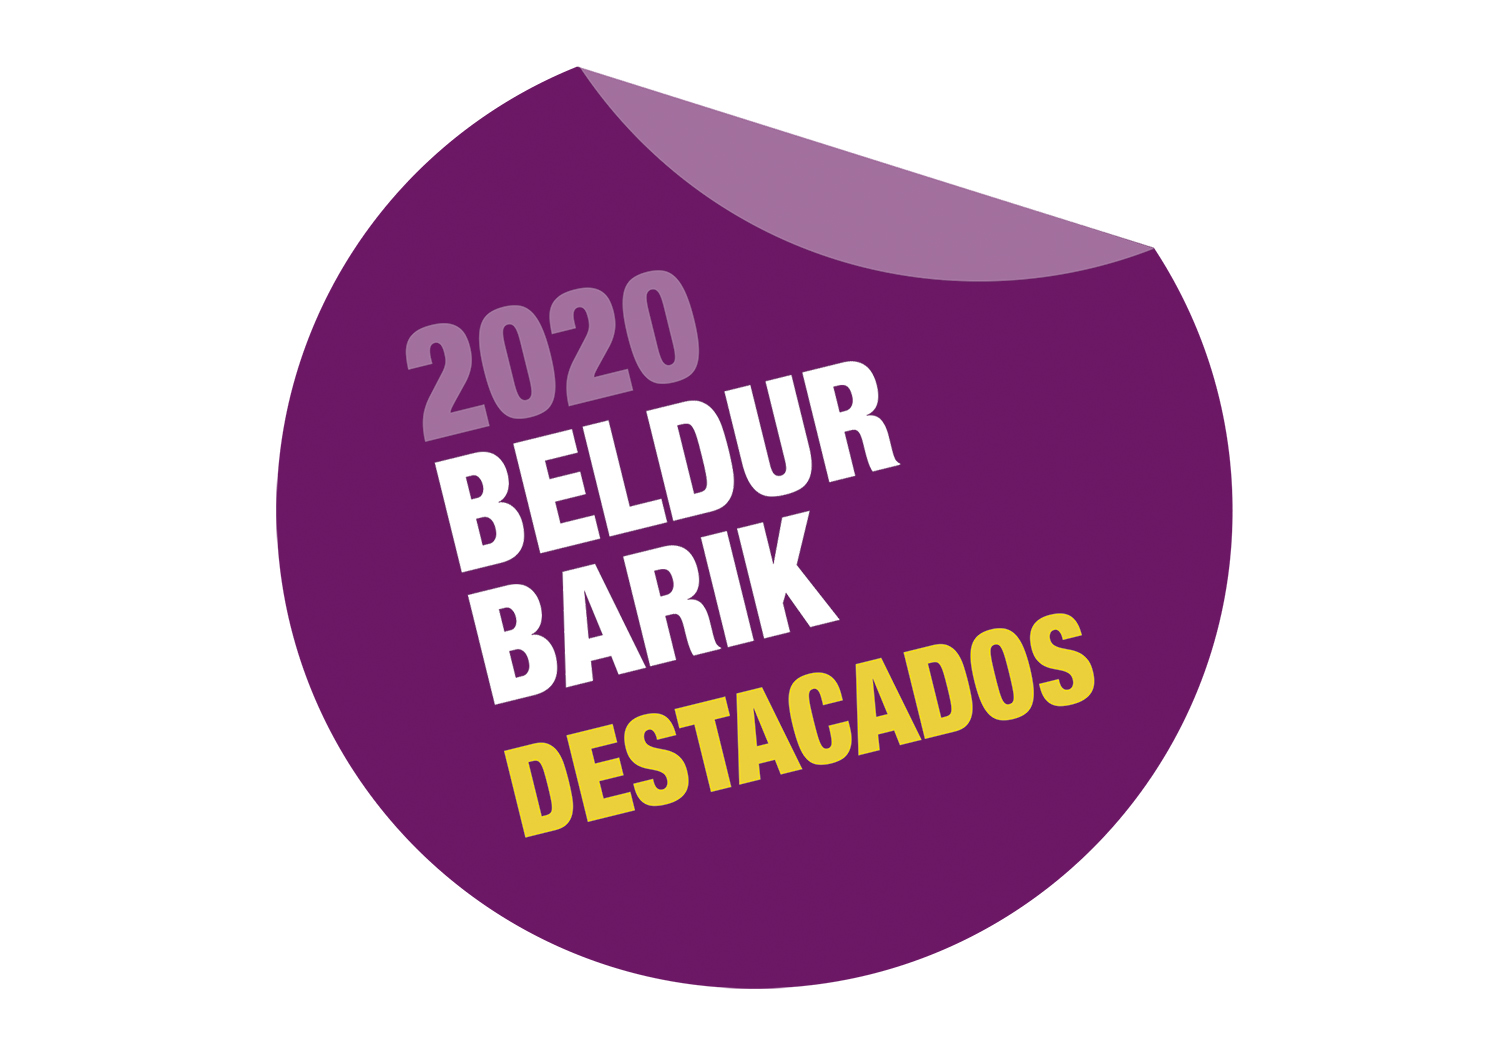 Punto Lila logo de Beldur Barik donde aparece el texto: 2020 Beldur Barik destacados.